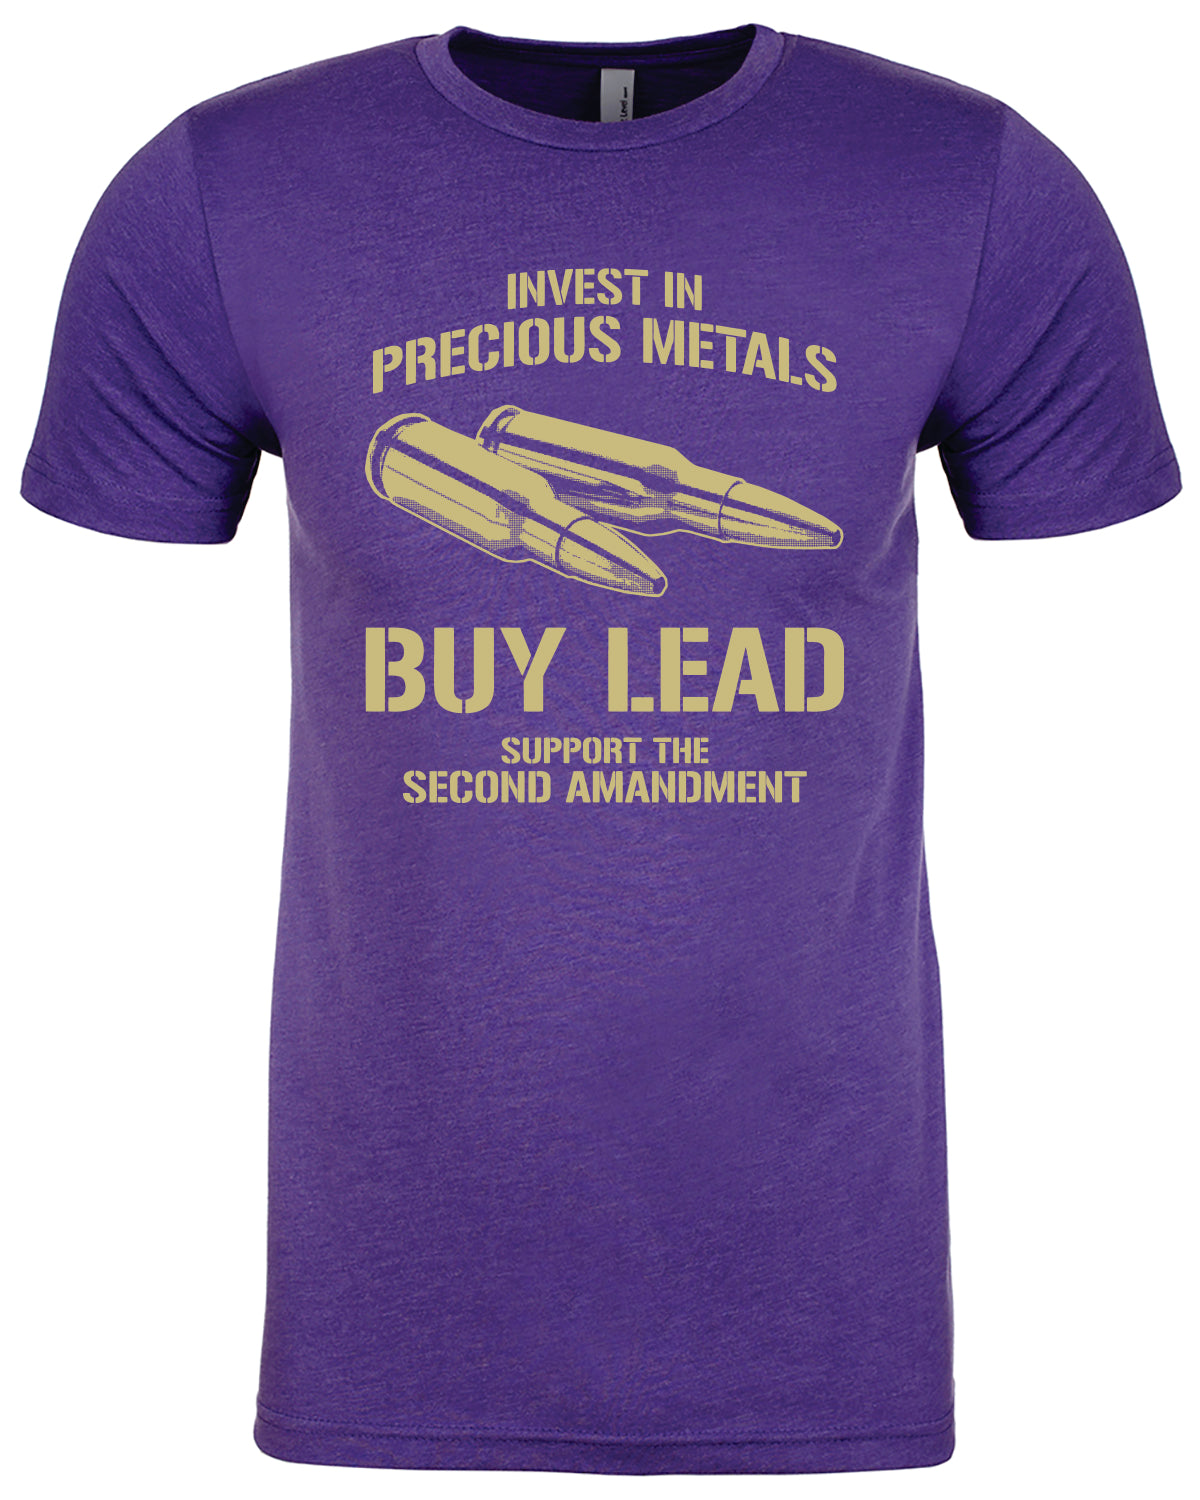 Invest in Precious Metals T-shirt